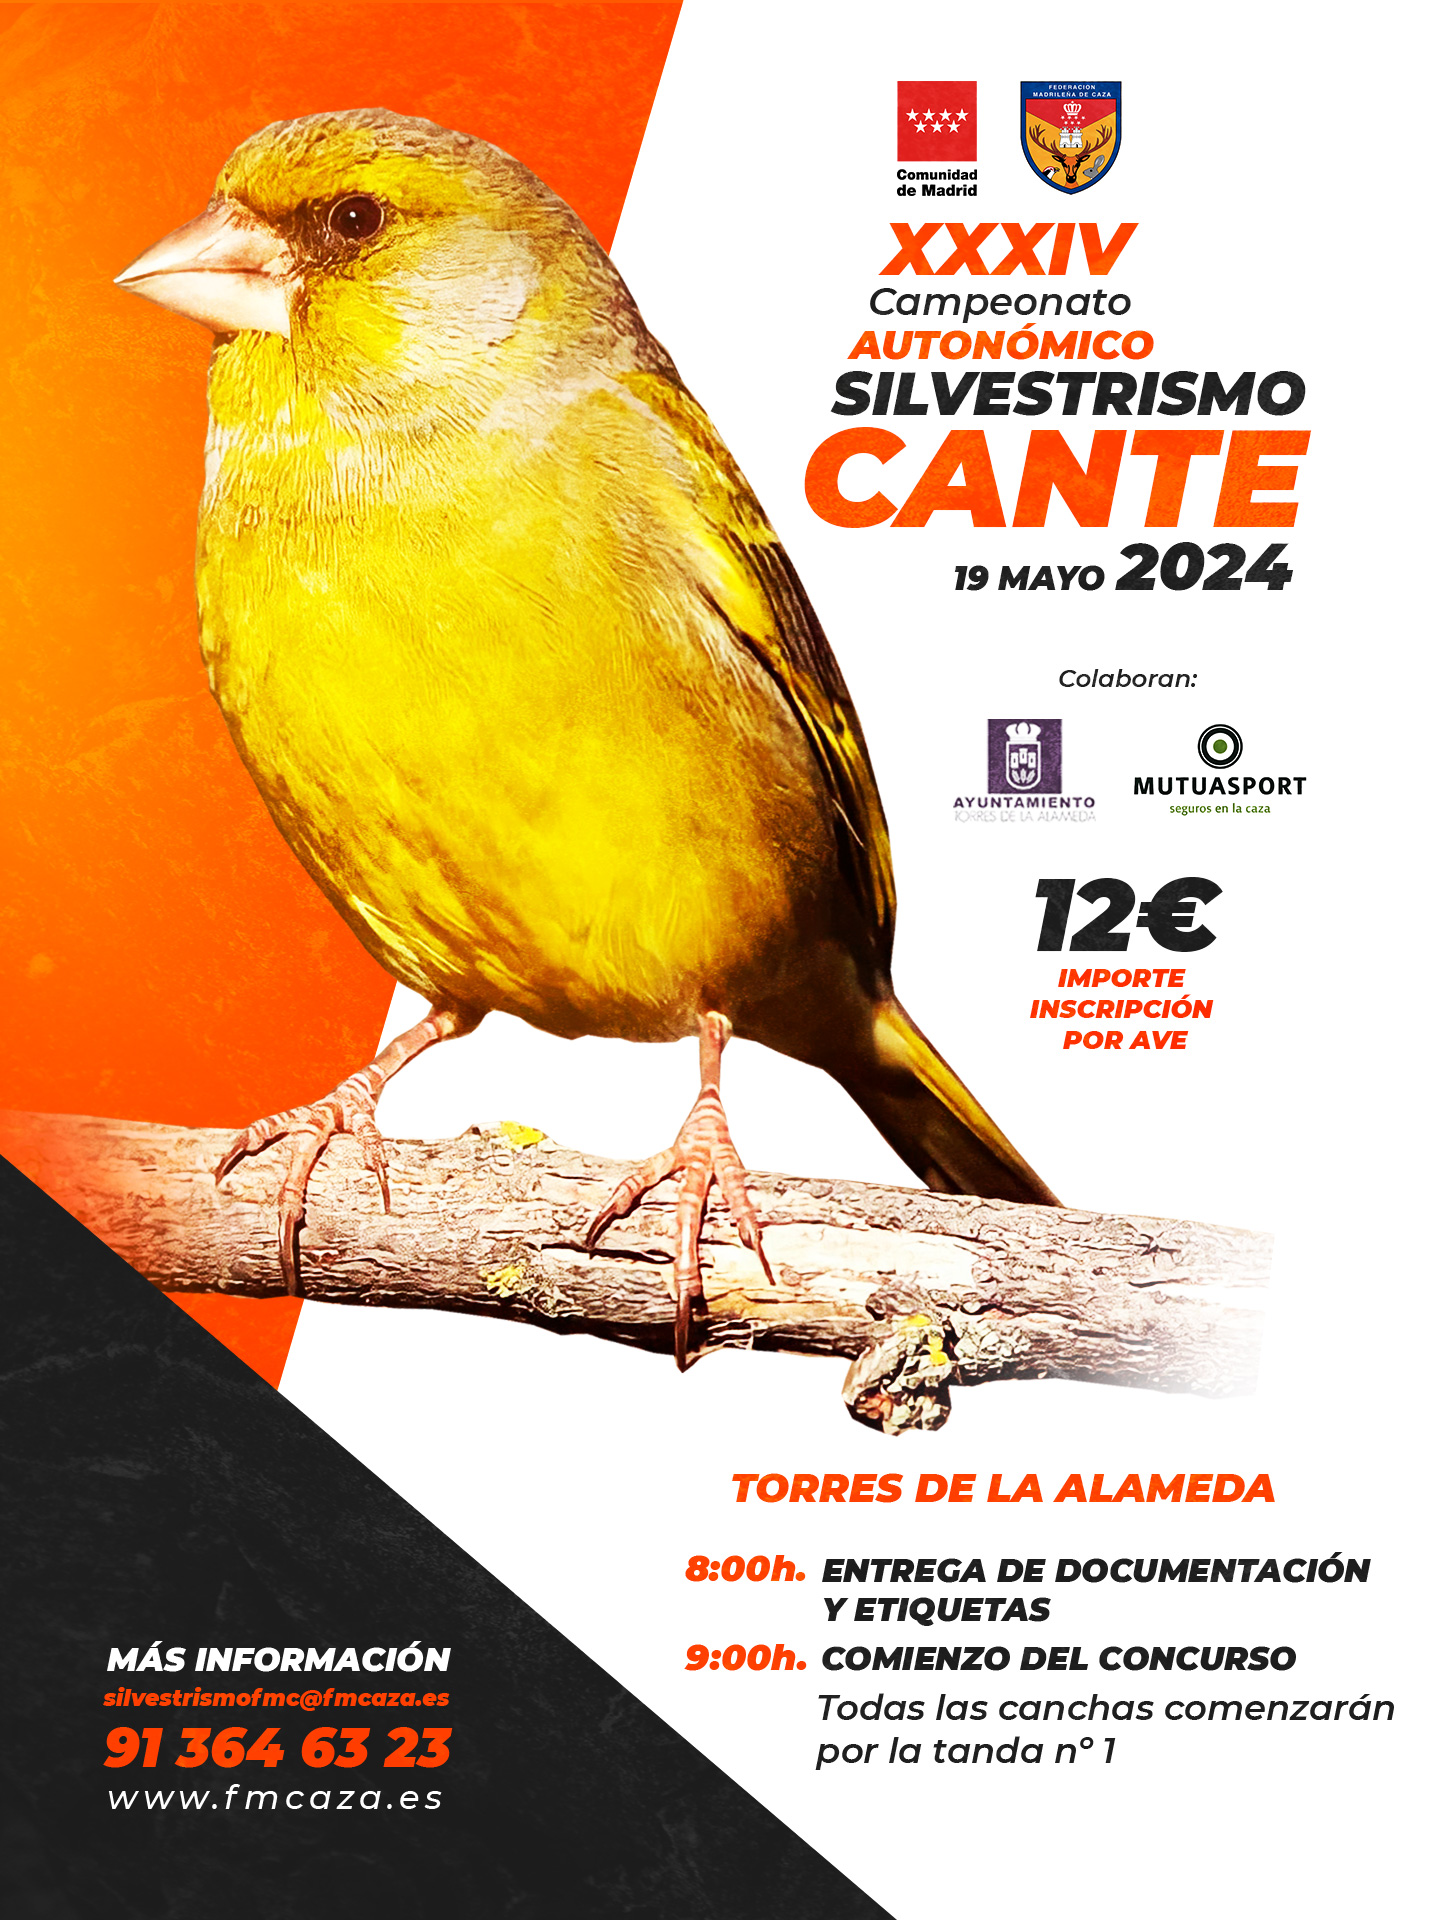 XXXIV-Campeonato-Autonómico-Silvestrismo-Cante---2024.jpg